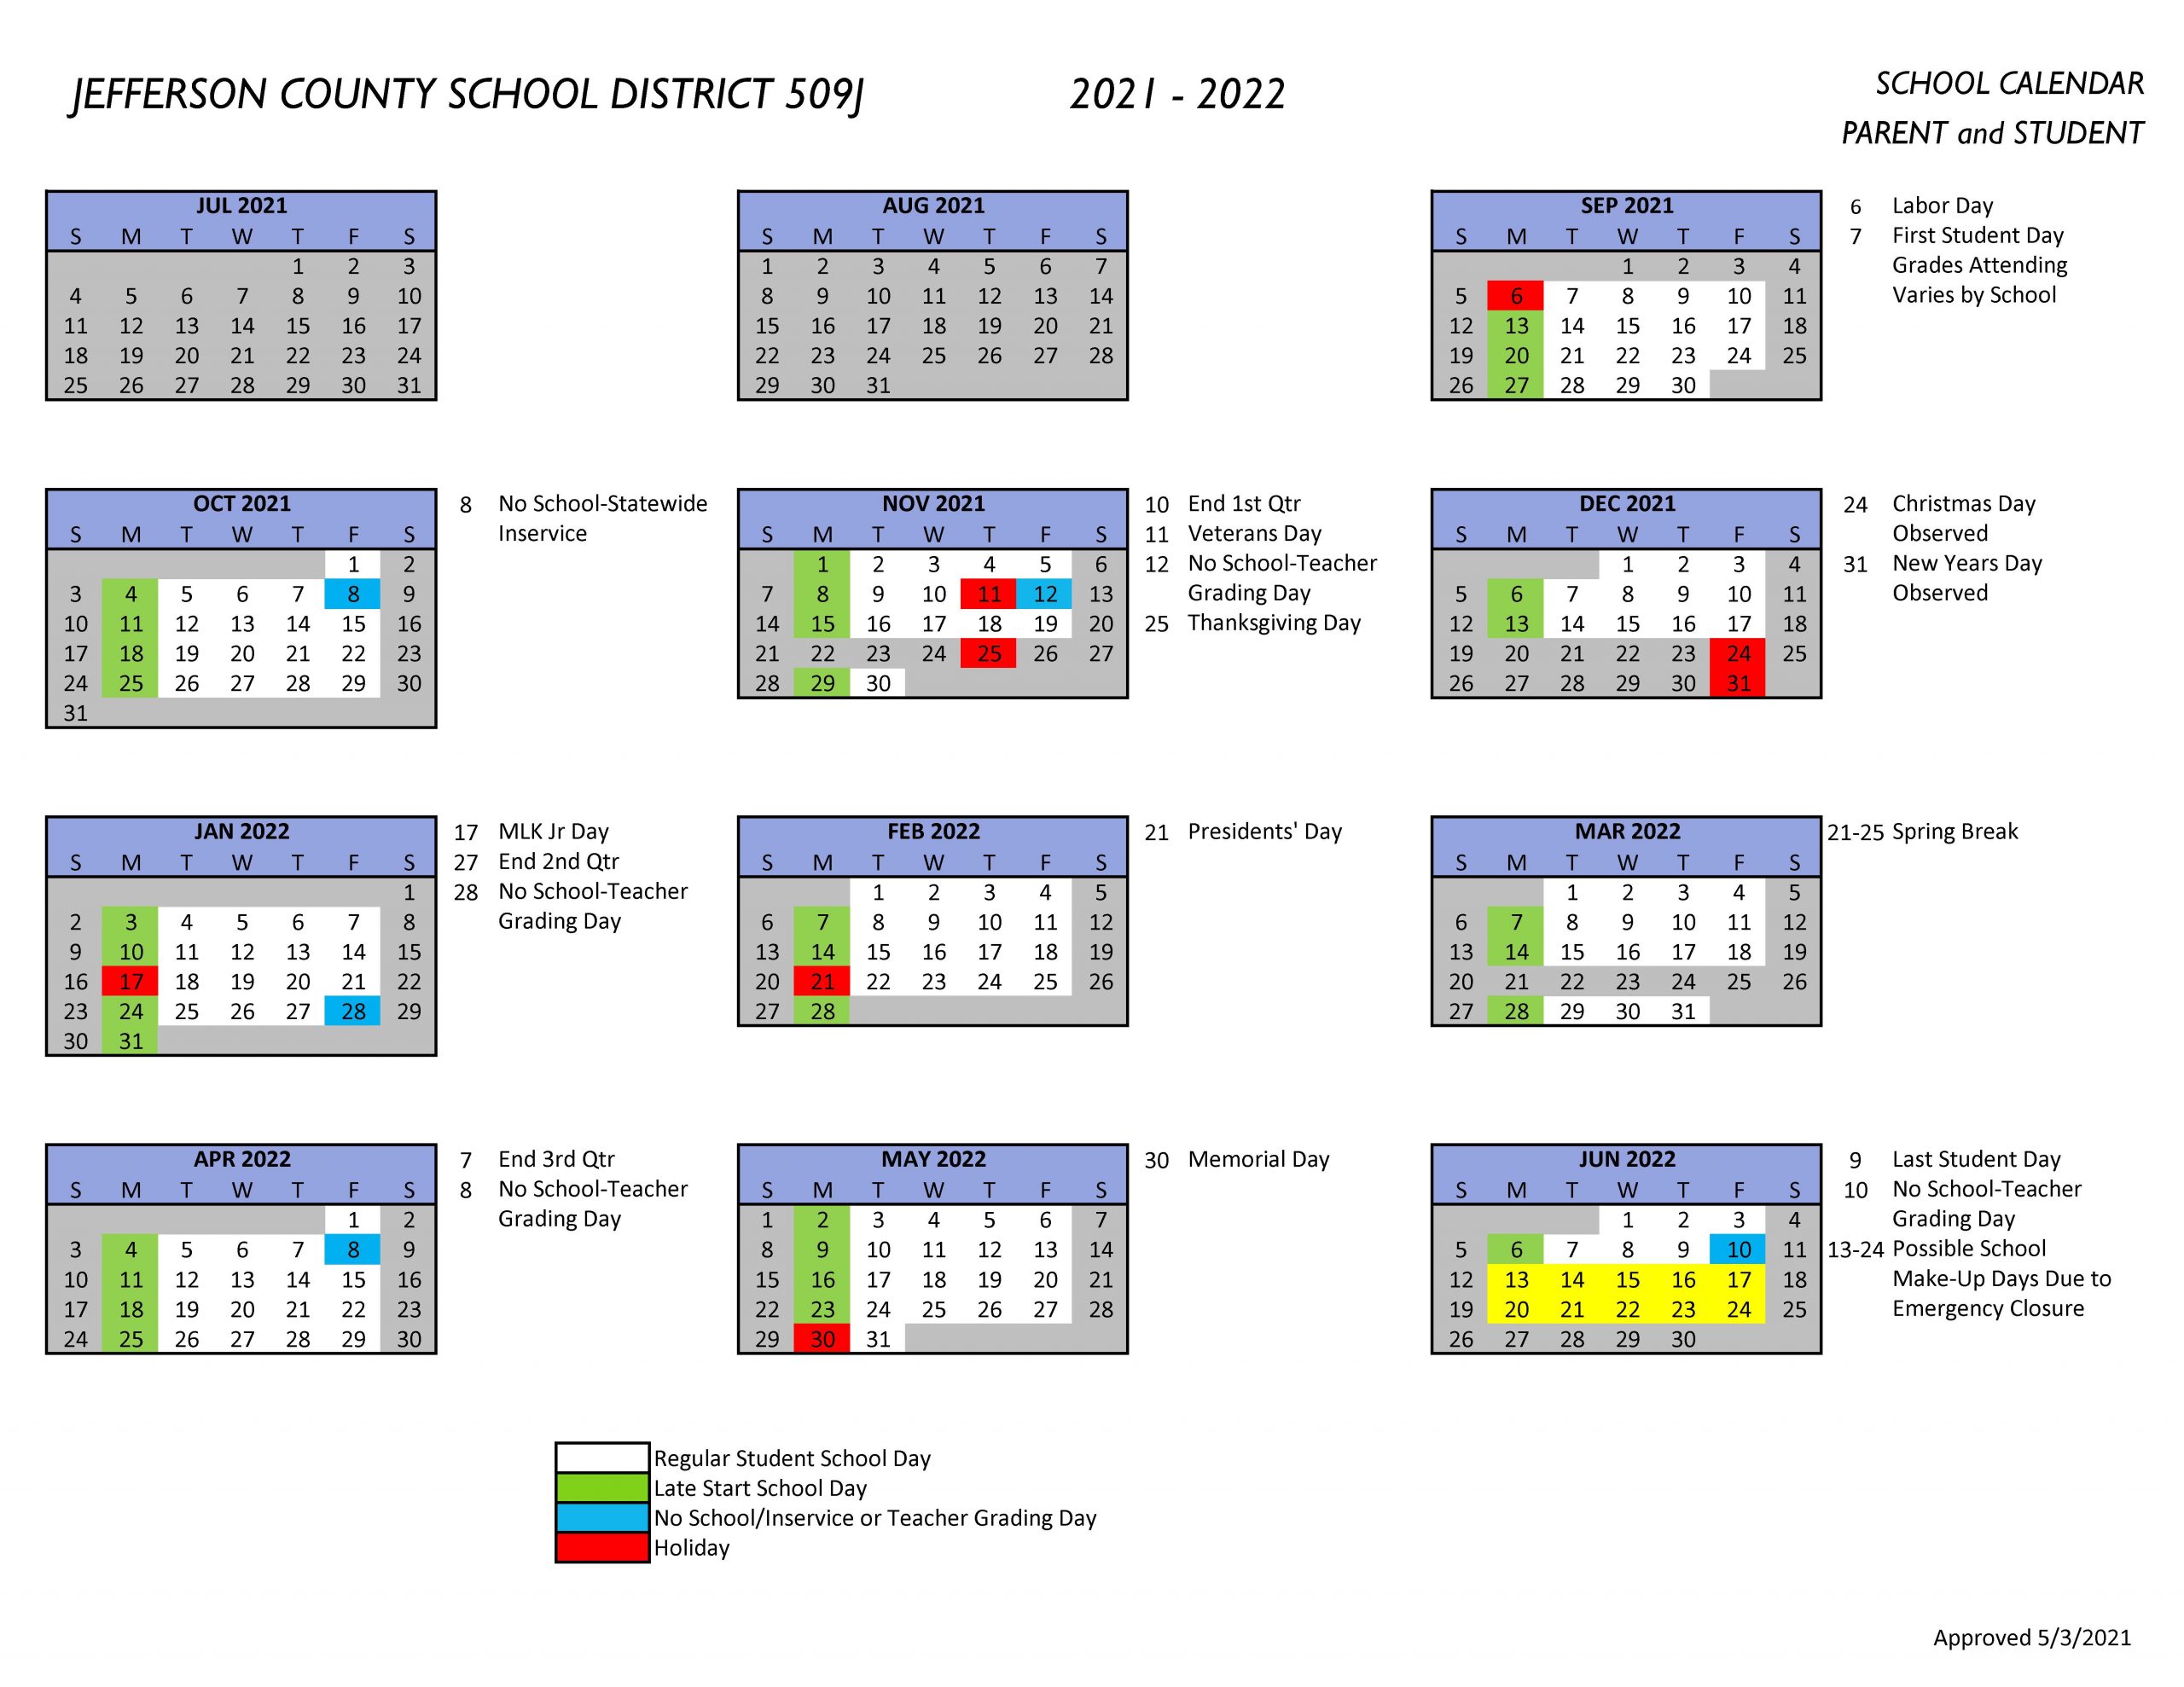 jefferson-county-schools-calendar-2022